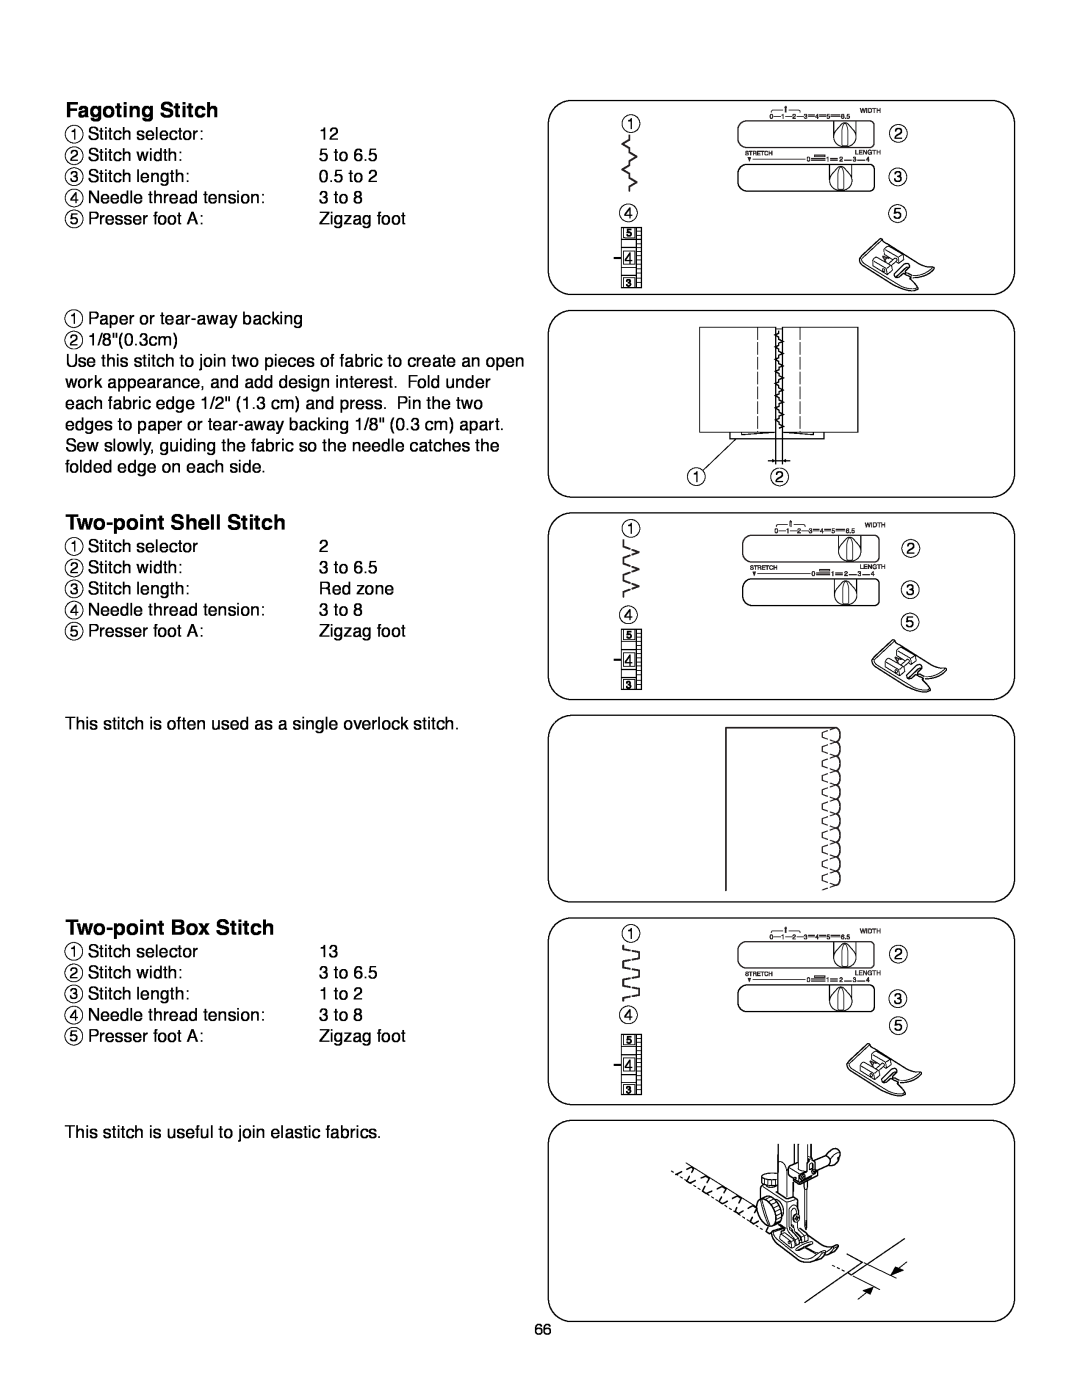 Janome MS-5027 instruction manual Fagoting Stitch, Two-point Shell Stitch, Two-point Box Stitch 